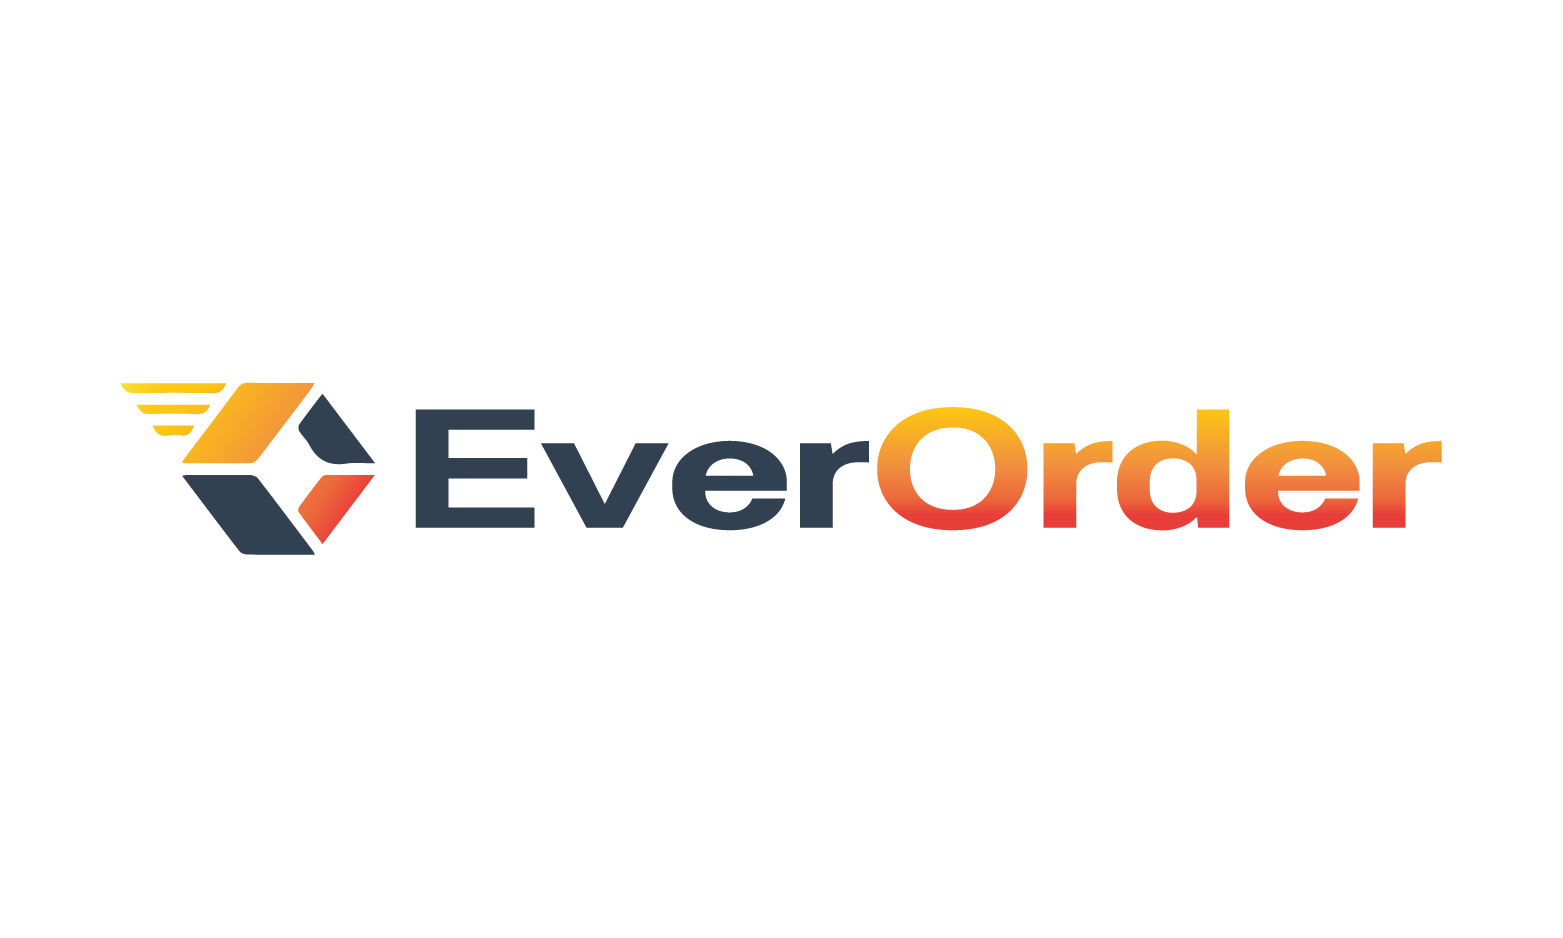 EverOrder.com - Creative brandable domain for sale